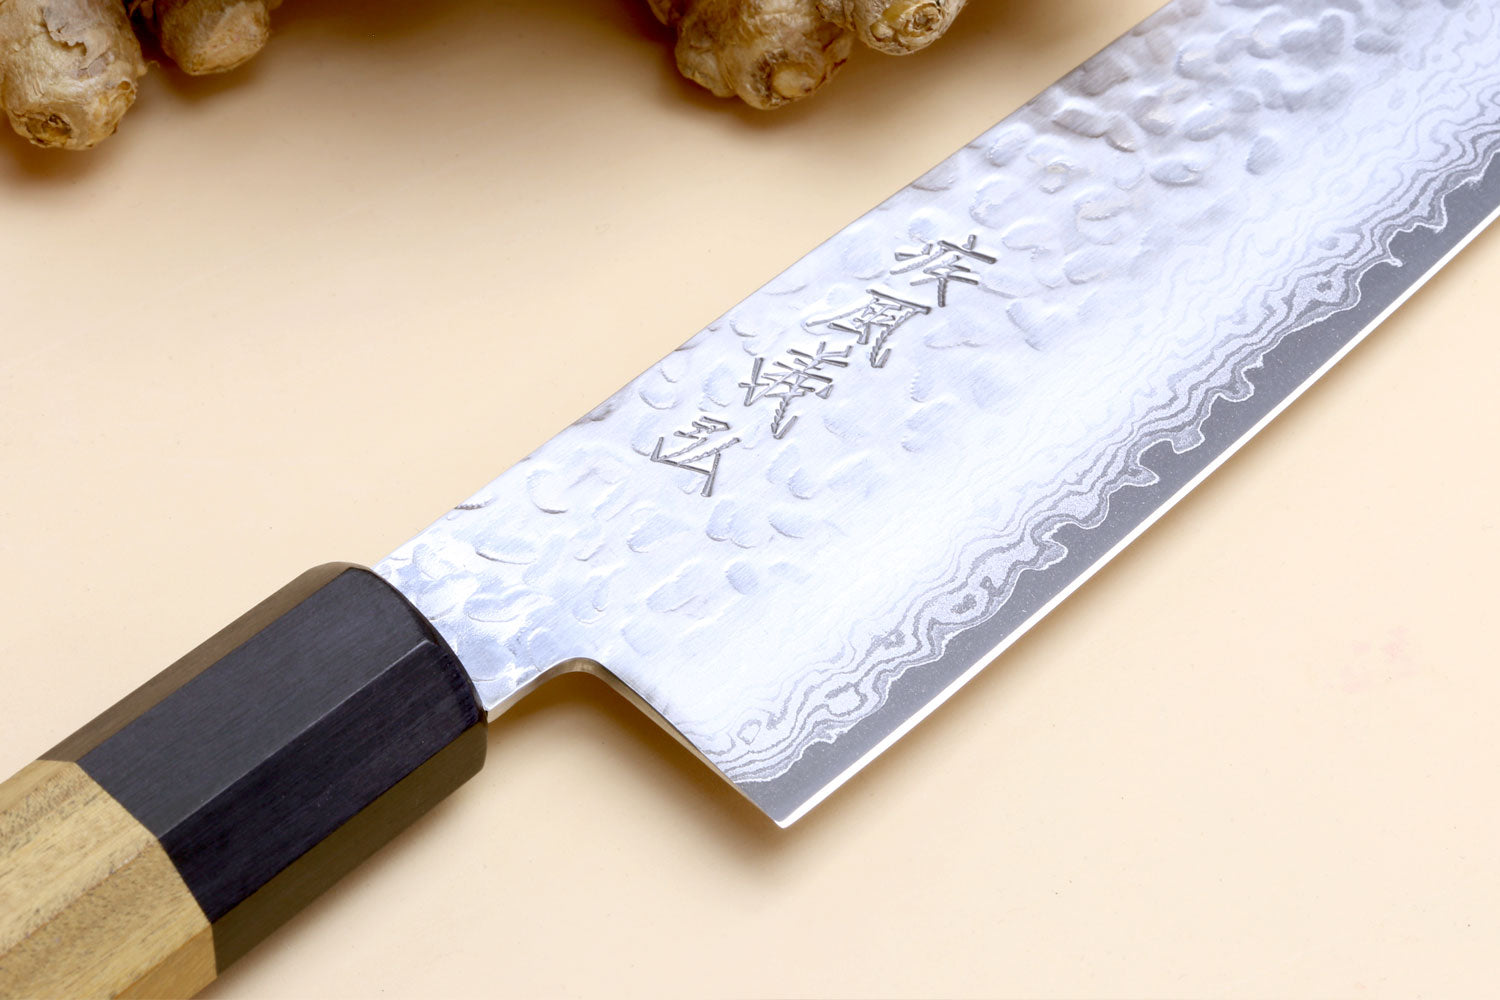 SiliSlick Damascus Chef's Knife Hammered Design  Professional 8 VG-10  Japanese Stainless Steel, Precise Cutting Meat, Vegetables, Steel Razor  Sharp Blade Edge 